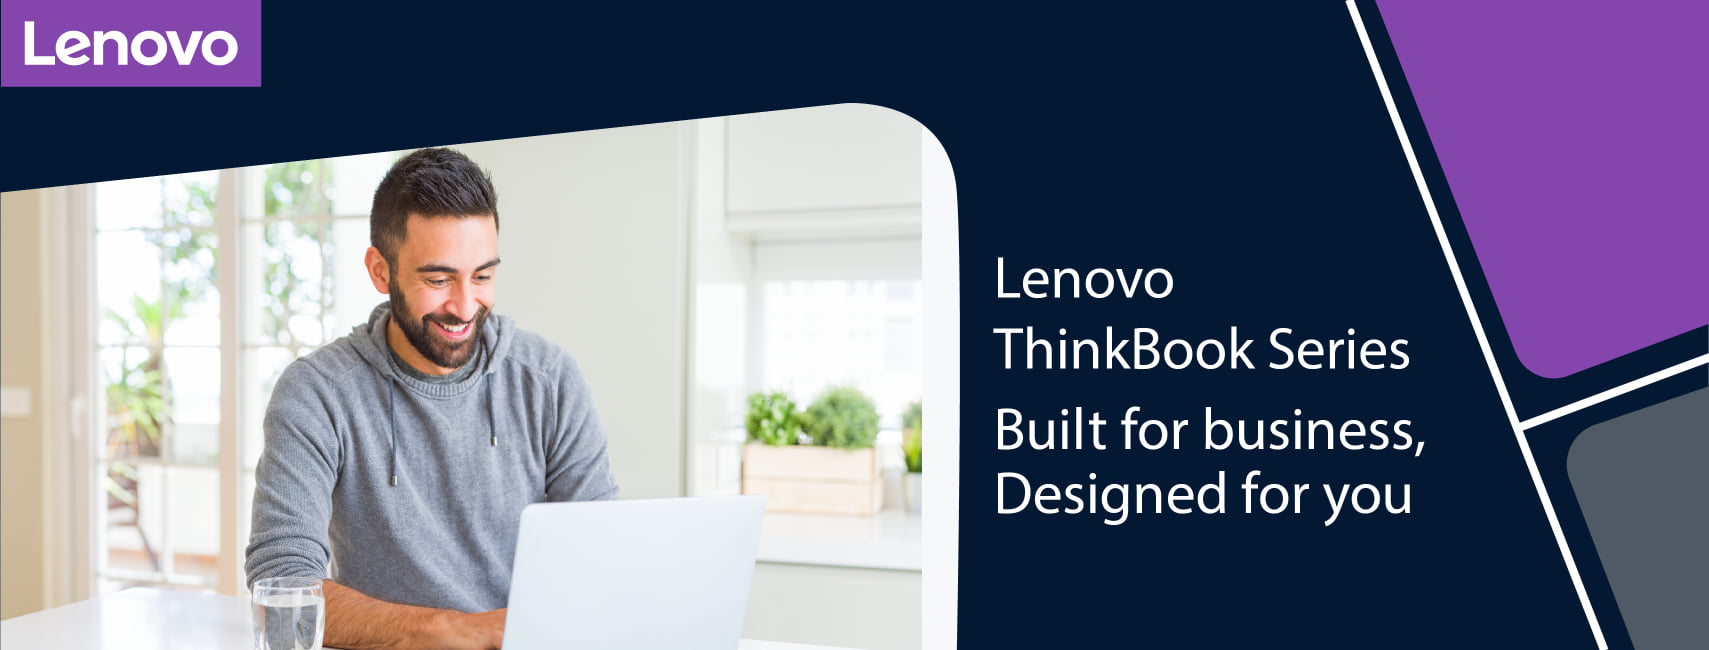 Lenovo ThinkBook Series: Built for business, designed for you